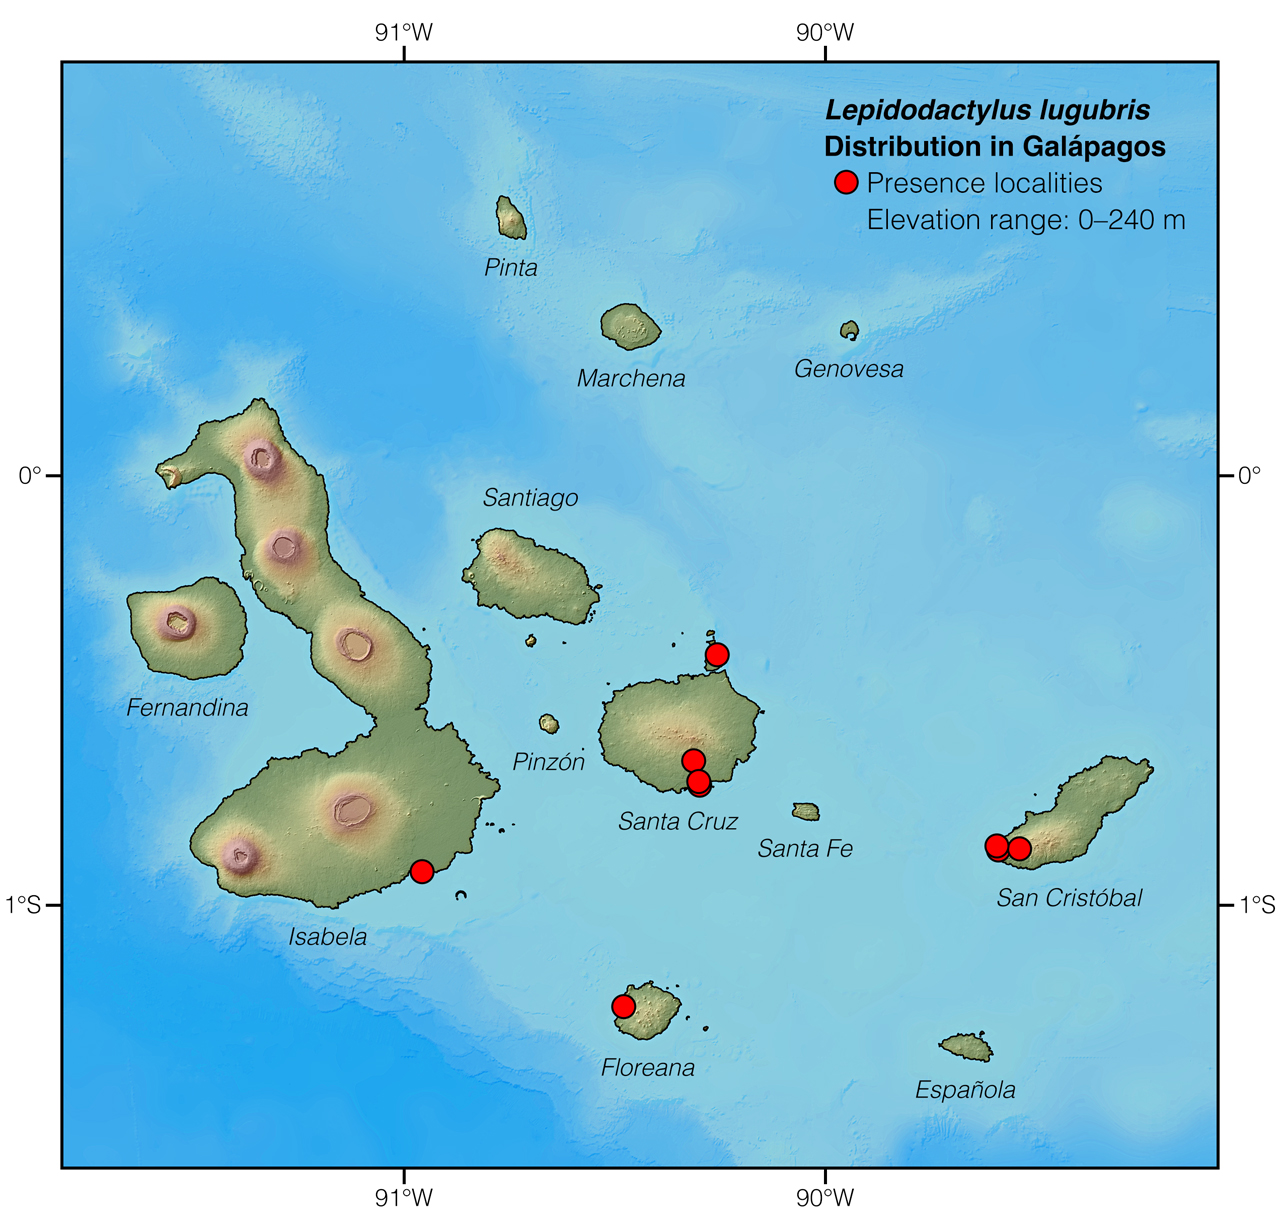 Distribution of Lepidodactylus lugubris in Galápagos